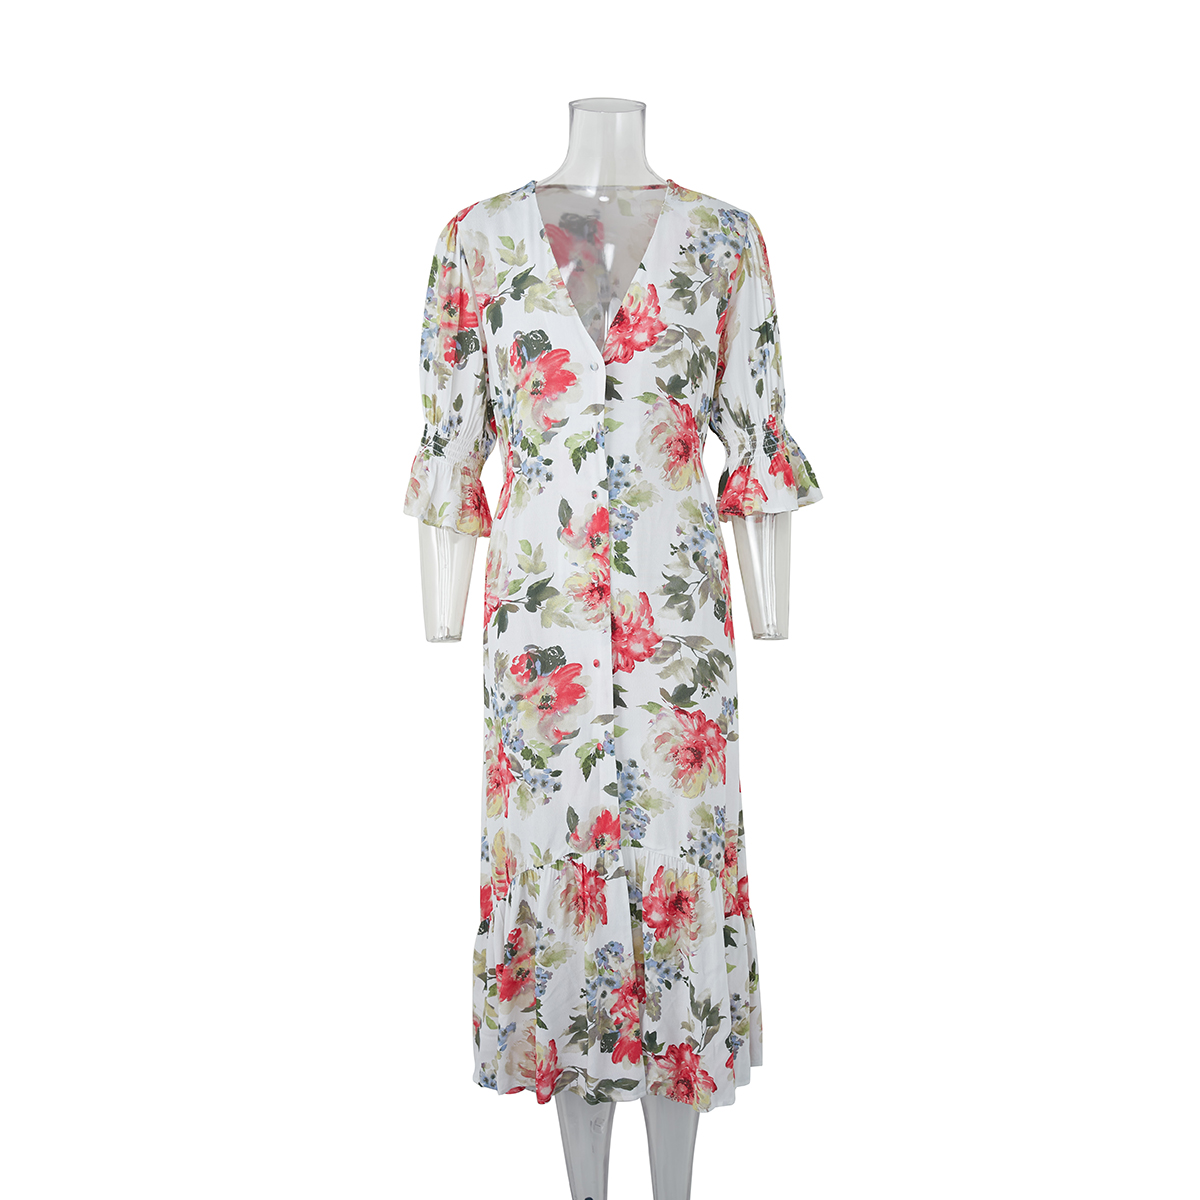 New Spring Summer Chiffon Dress Women V-Neck Ruffle Sleeve Print Dresses Sweet Print Slim Featured Image